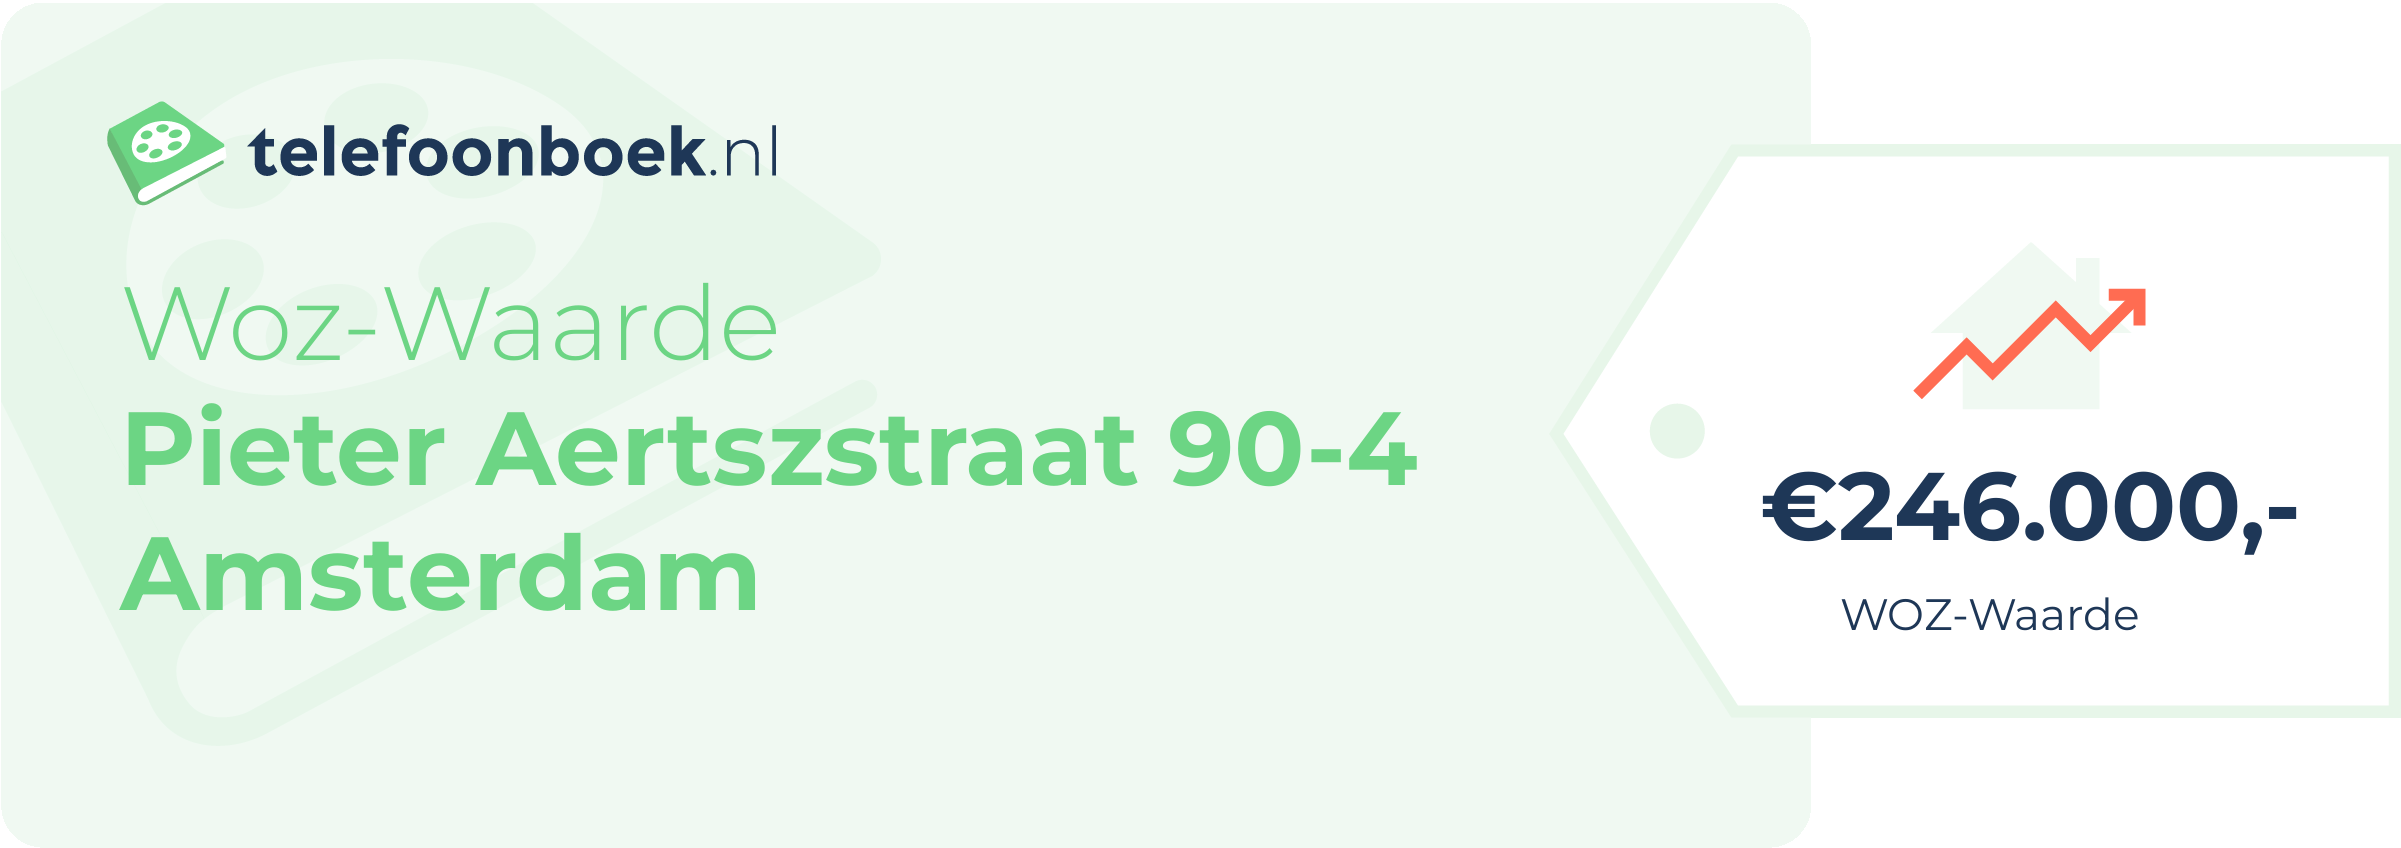 WOZ-waarde Pieter Aertszstraat 90-4 Amsterdam